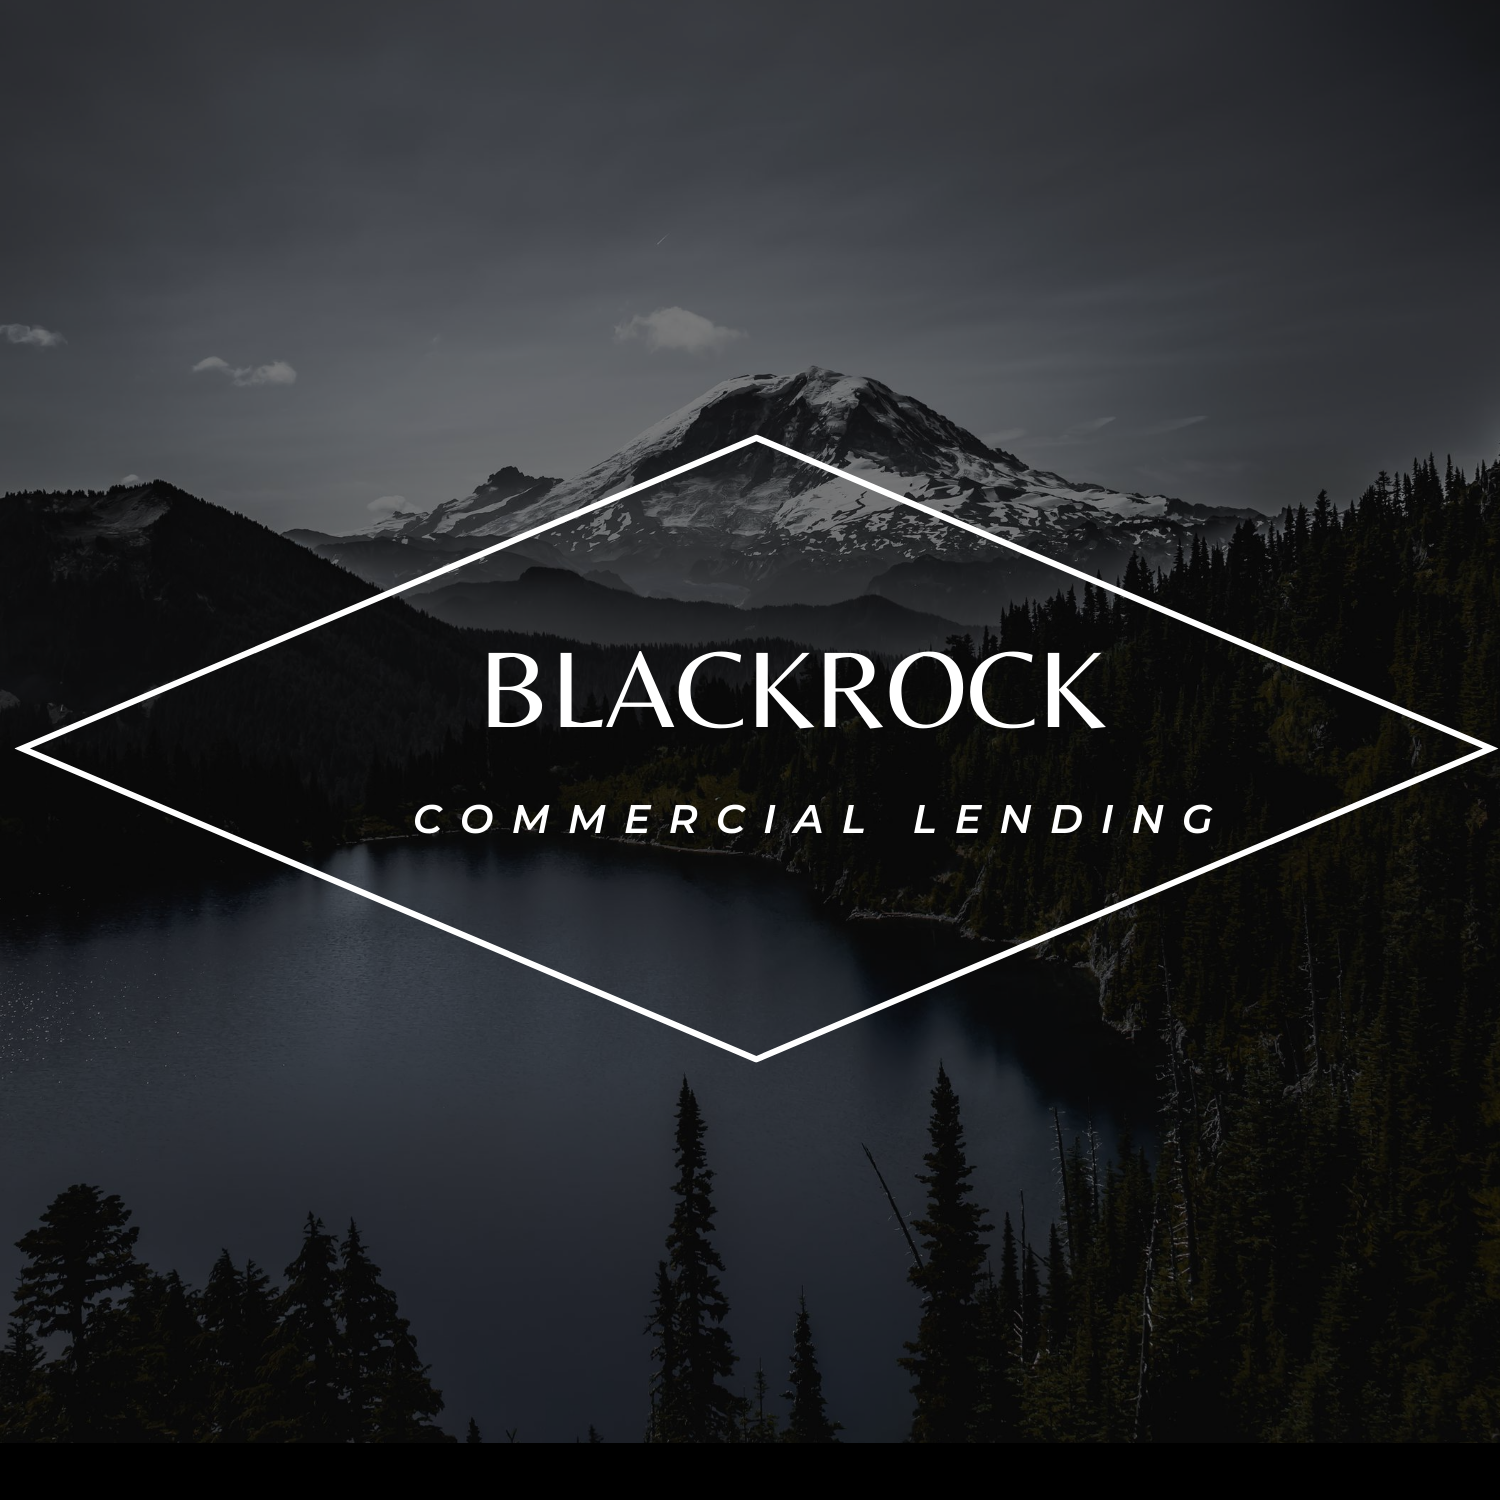 BlackRock Commercial Lending